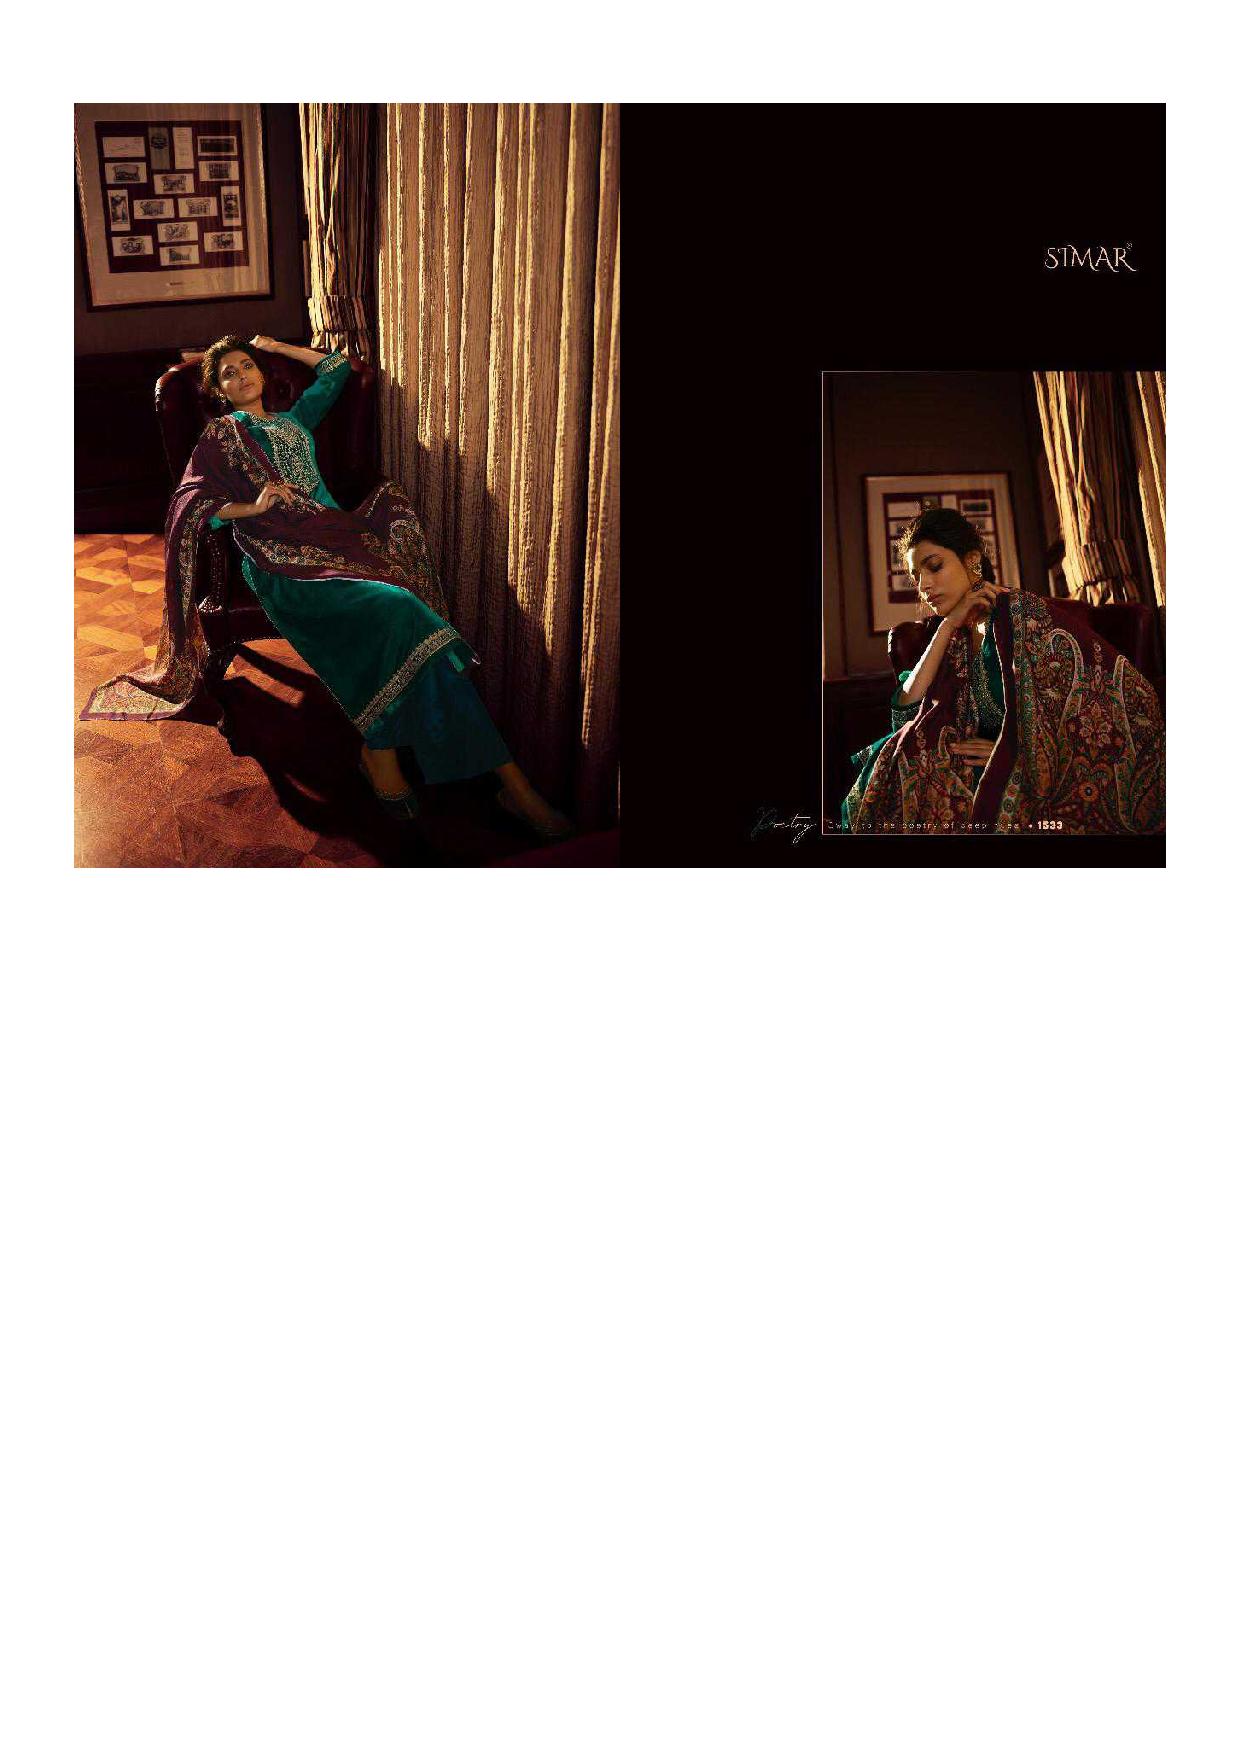 Glossy Present Velvet Beautiful Embroidery Designer Work Stright Salwar Suit Wholesaler